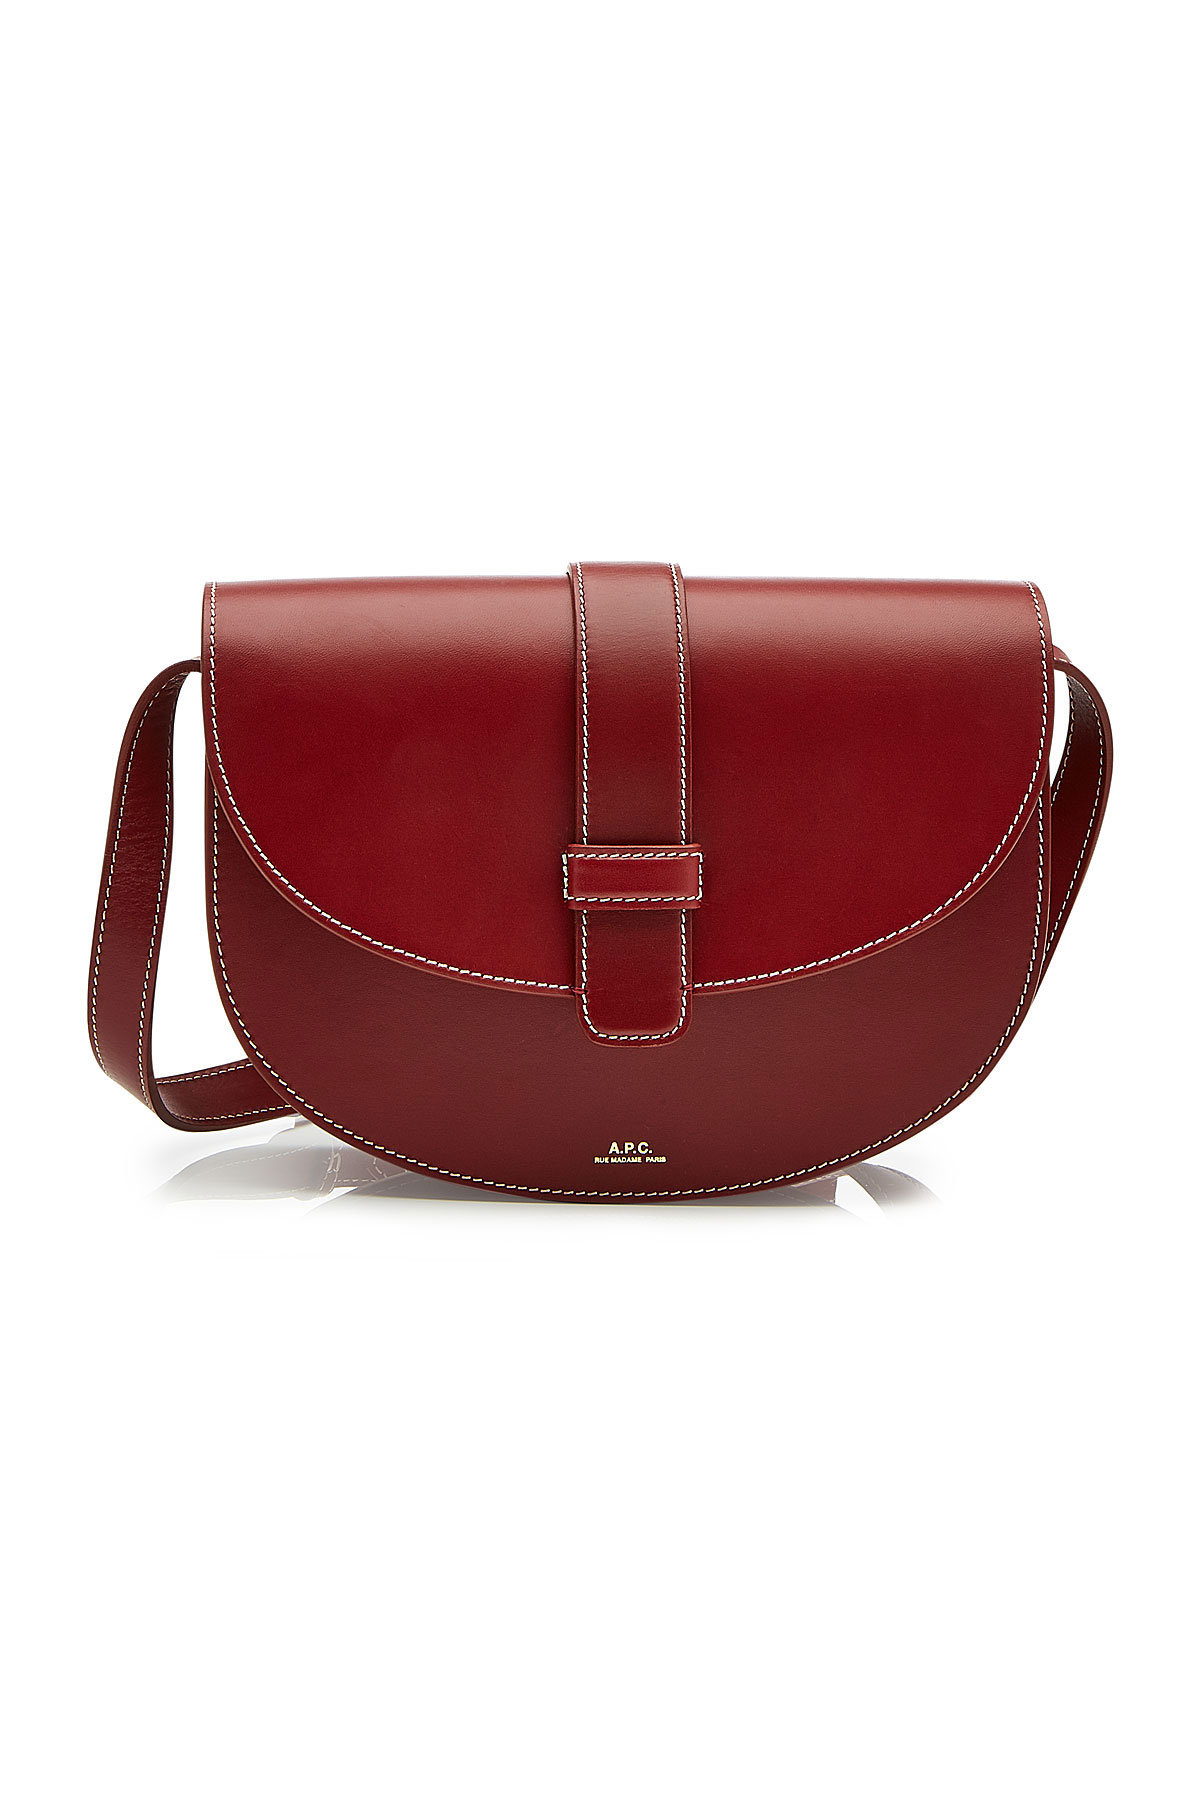 Eloise Leather Shoulder Bag by A.P.C.